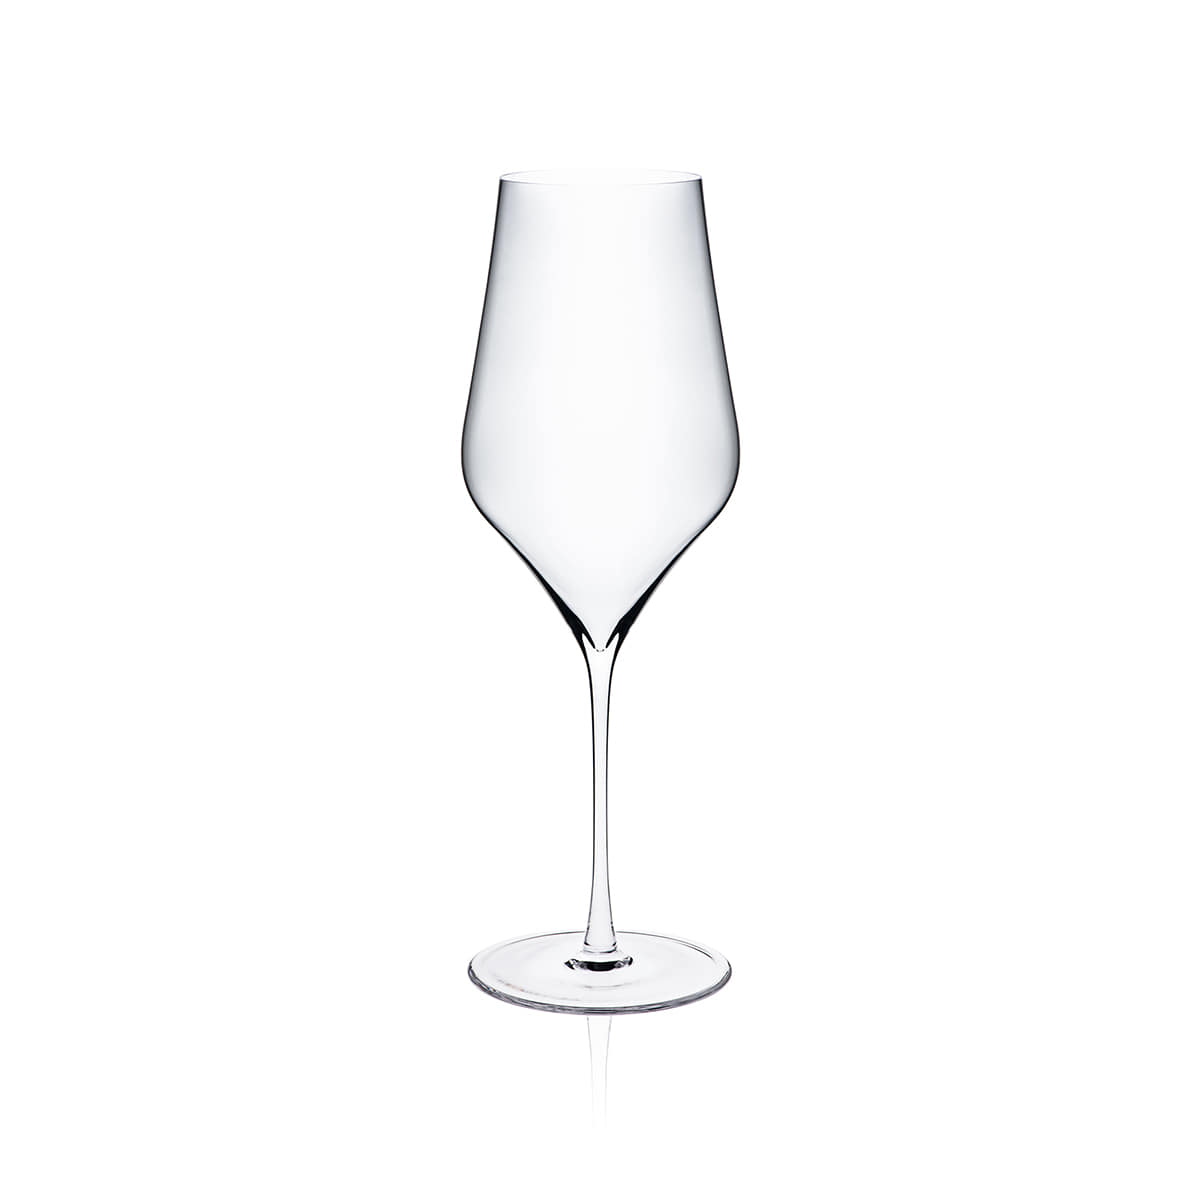 RONA Wine Glass 로나 와인잔_BALLET 520MADE IN SLOVAKIA